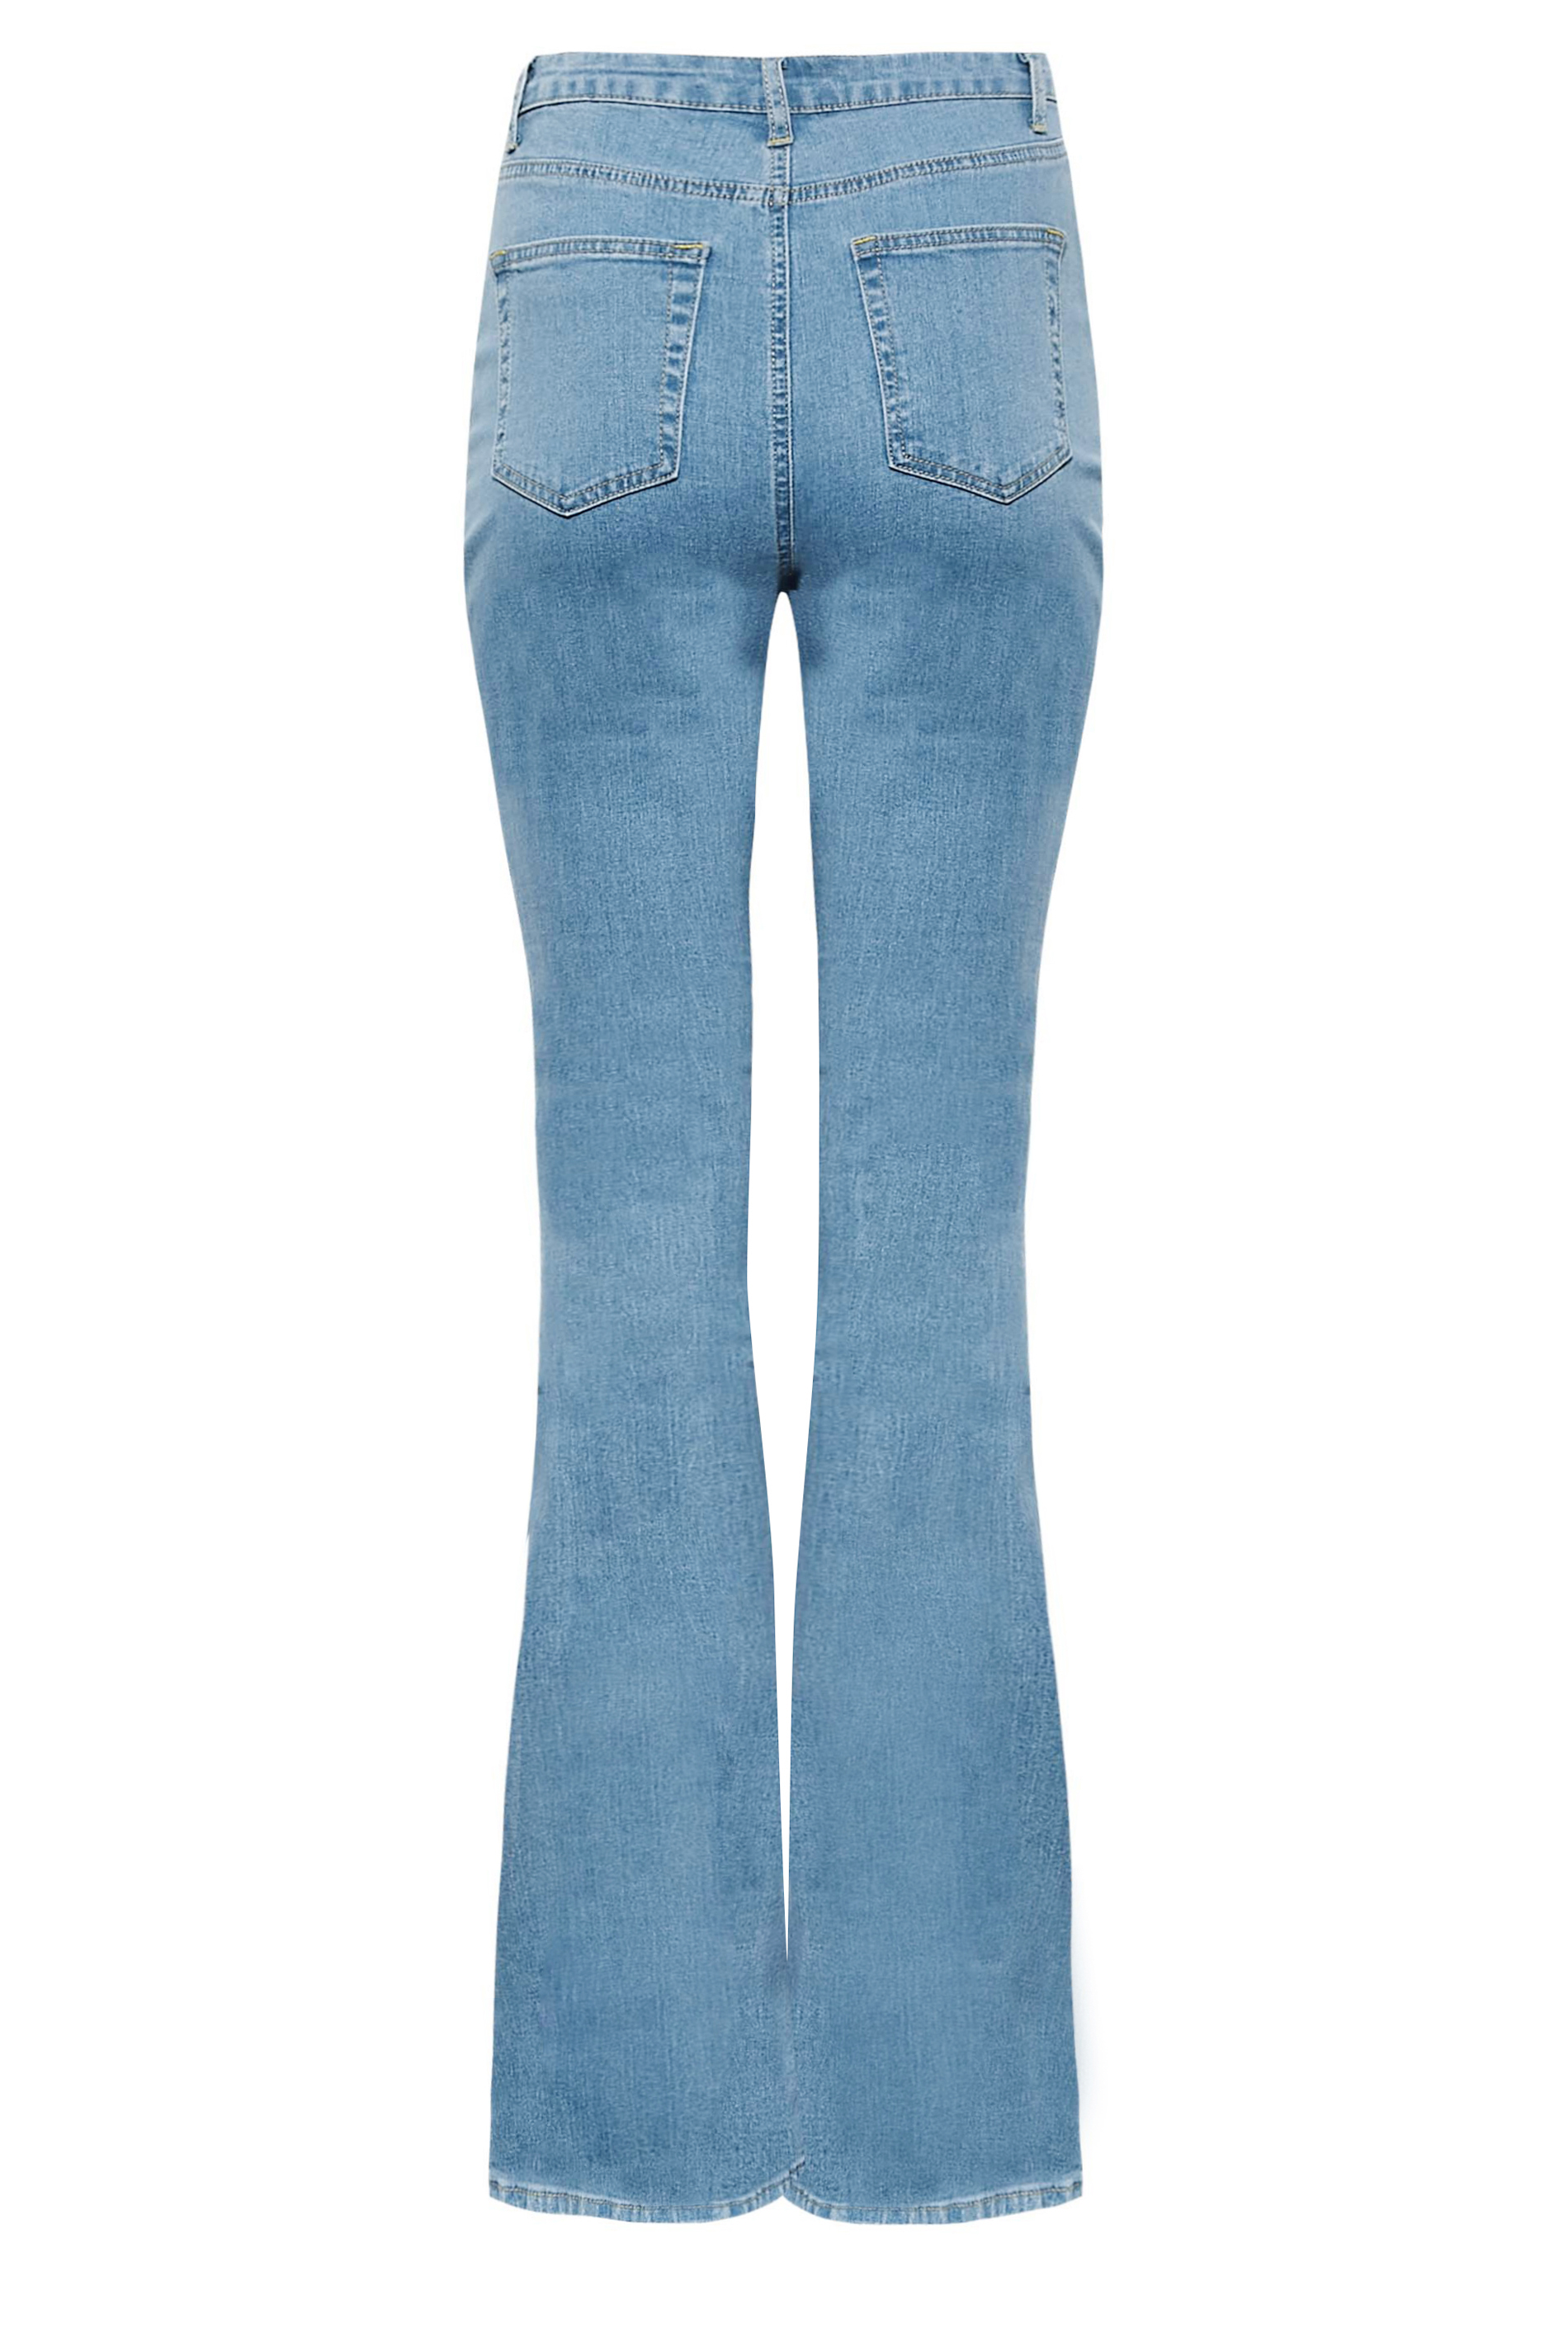 LTS Tall Women's Blue Flared Jeans | Long Tall Sally